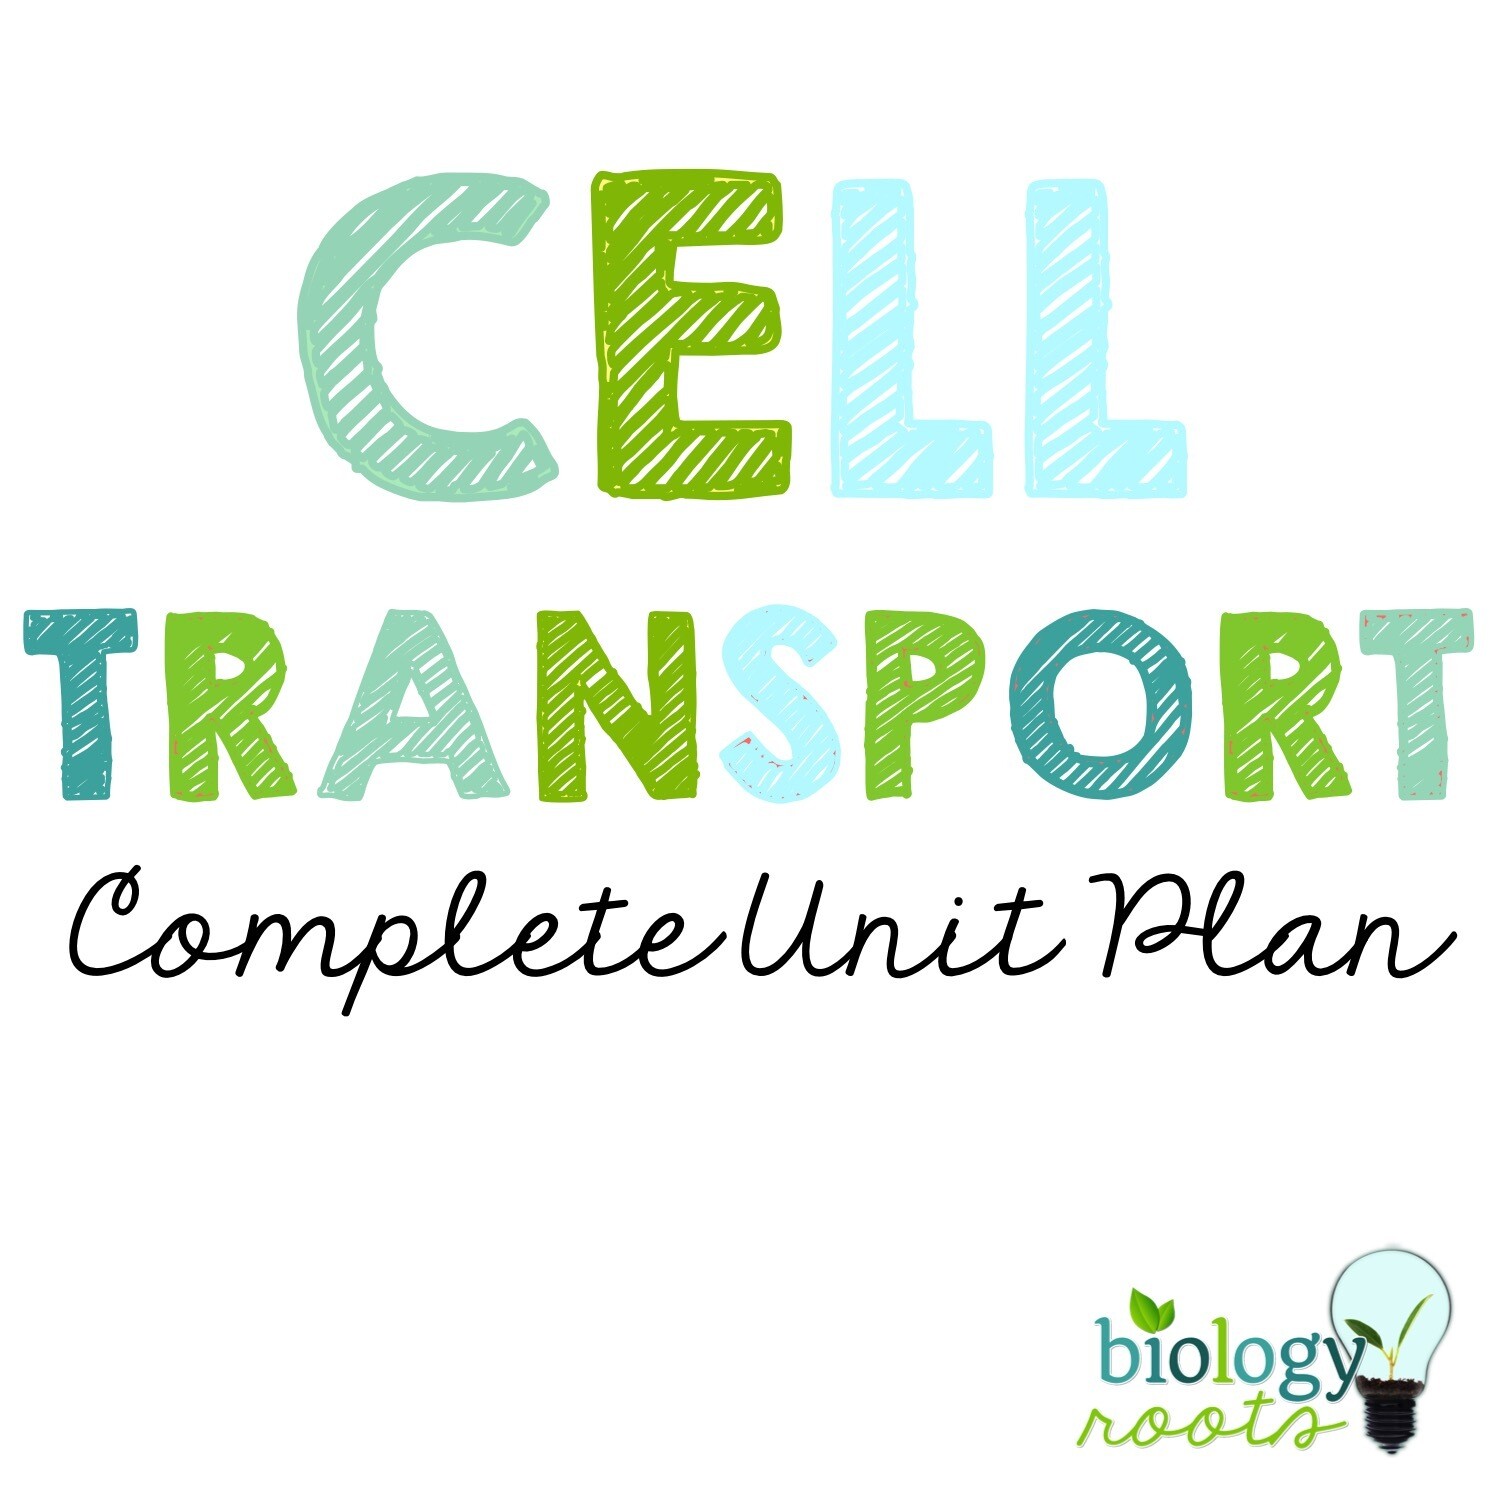 Cell Transport Unit Plan